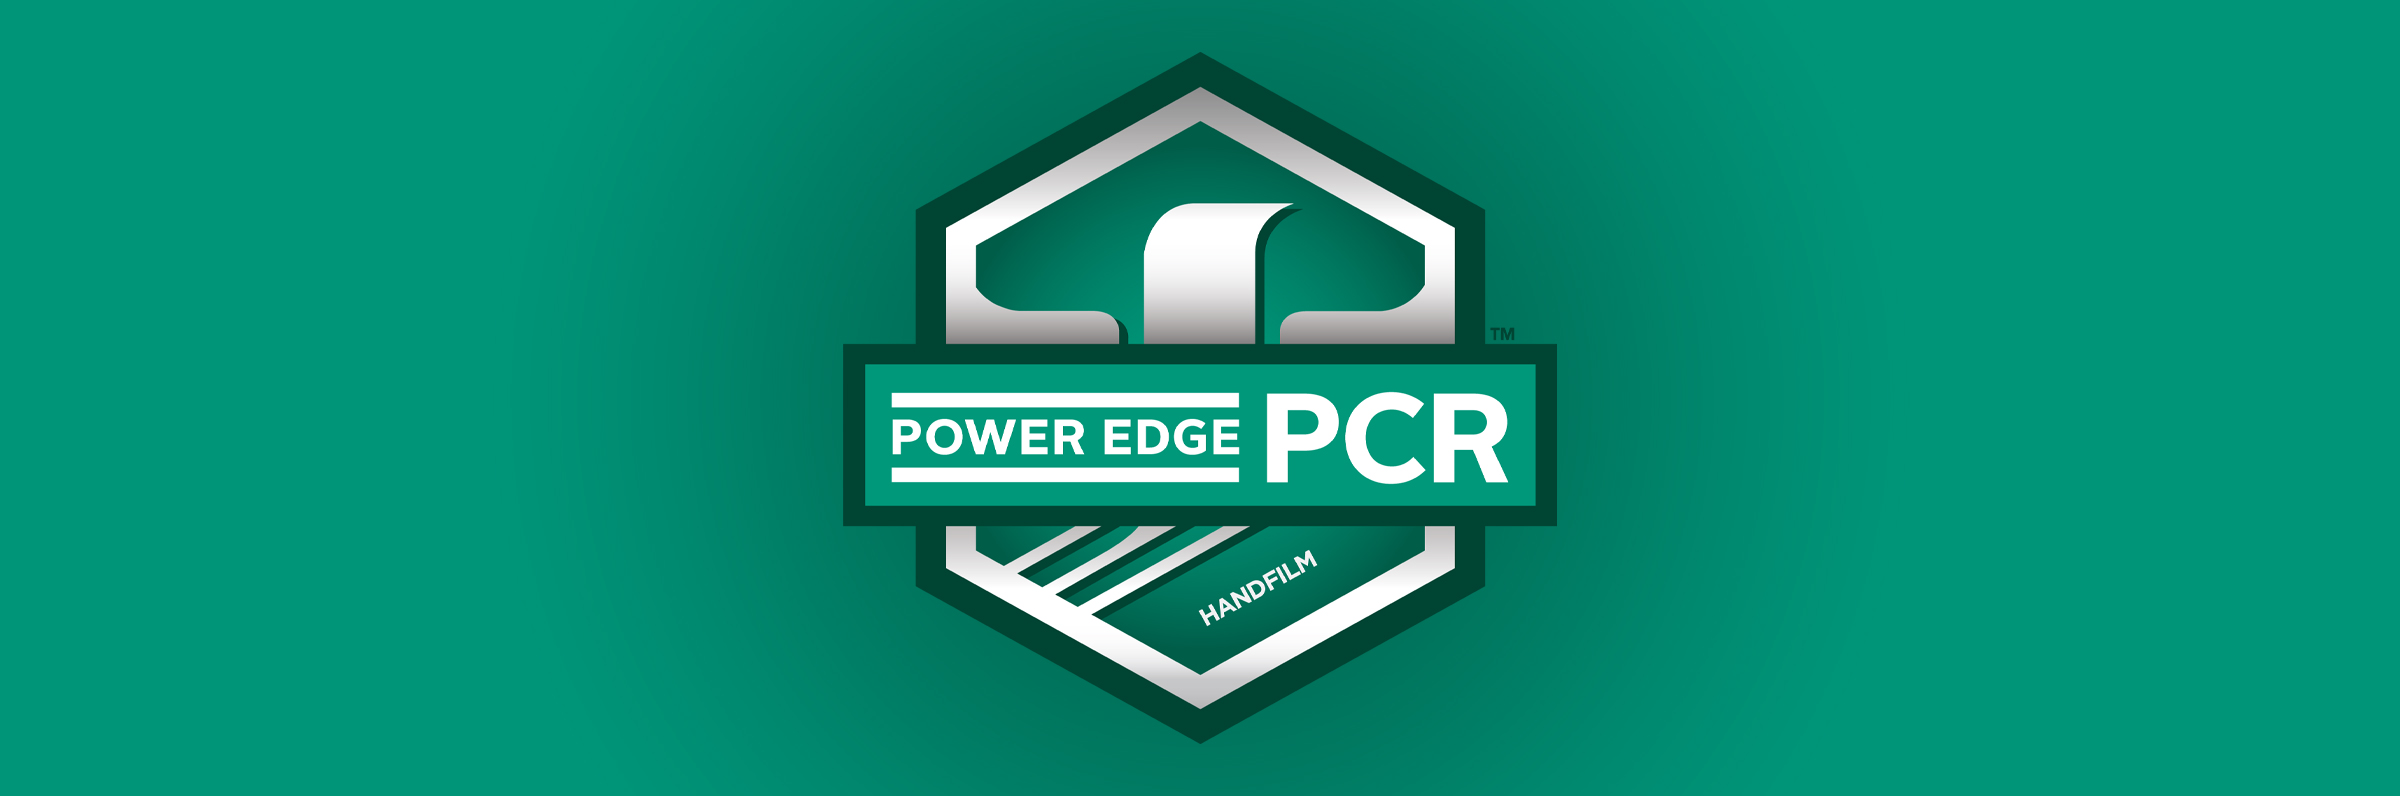 Power-Edge-PCR-LP-Hero